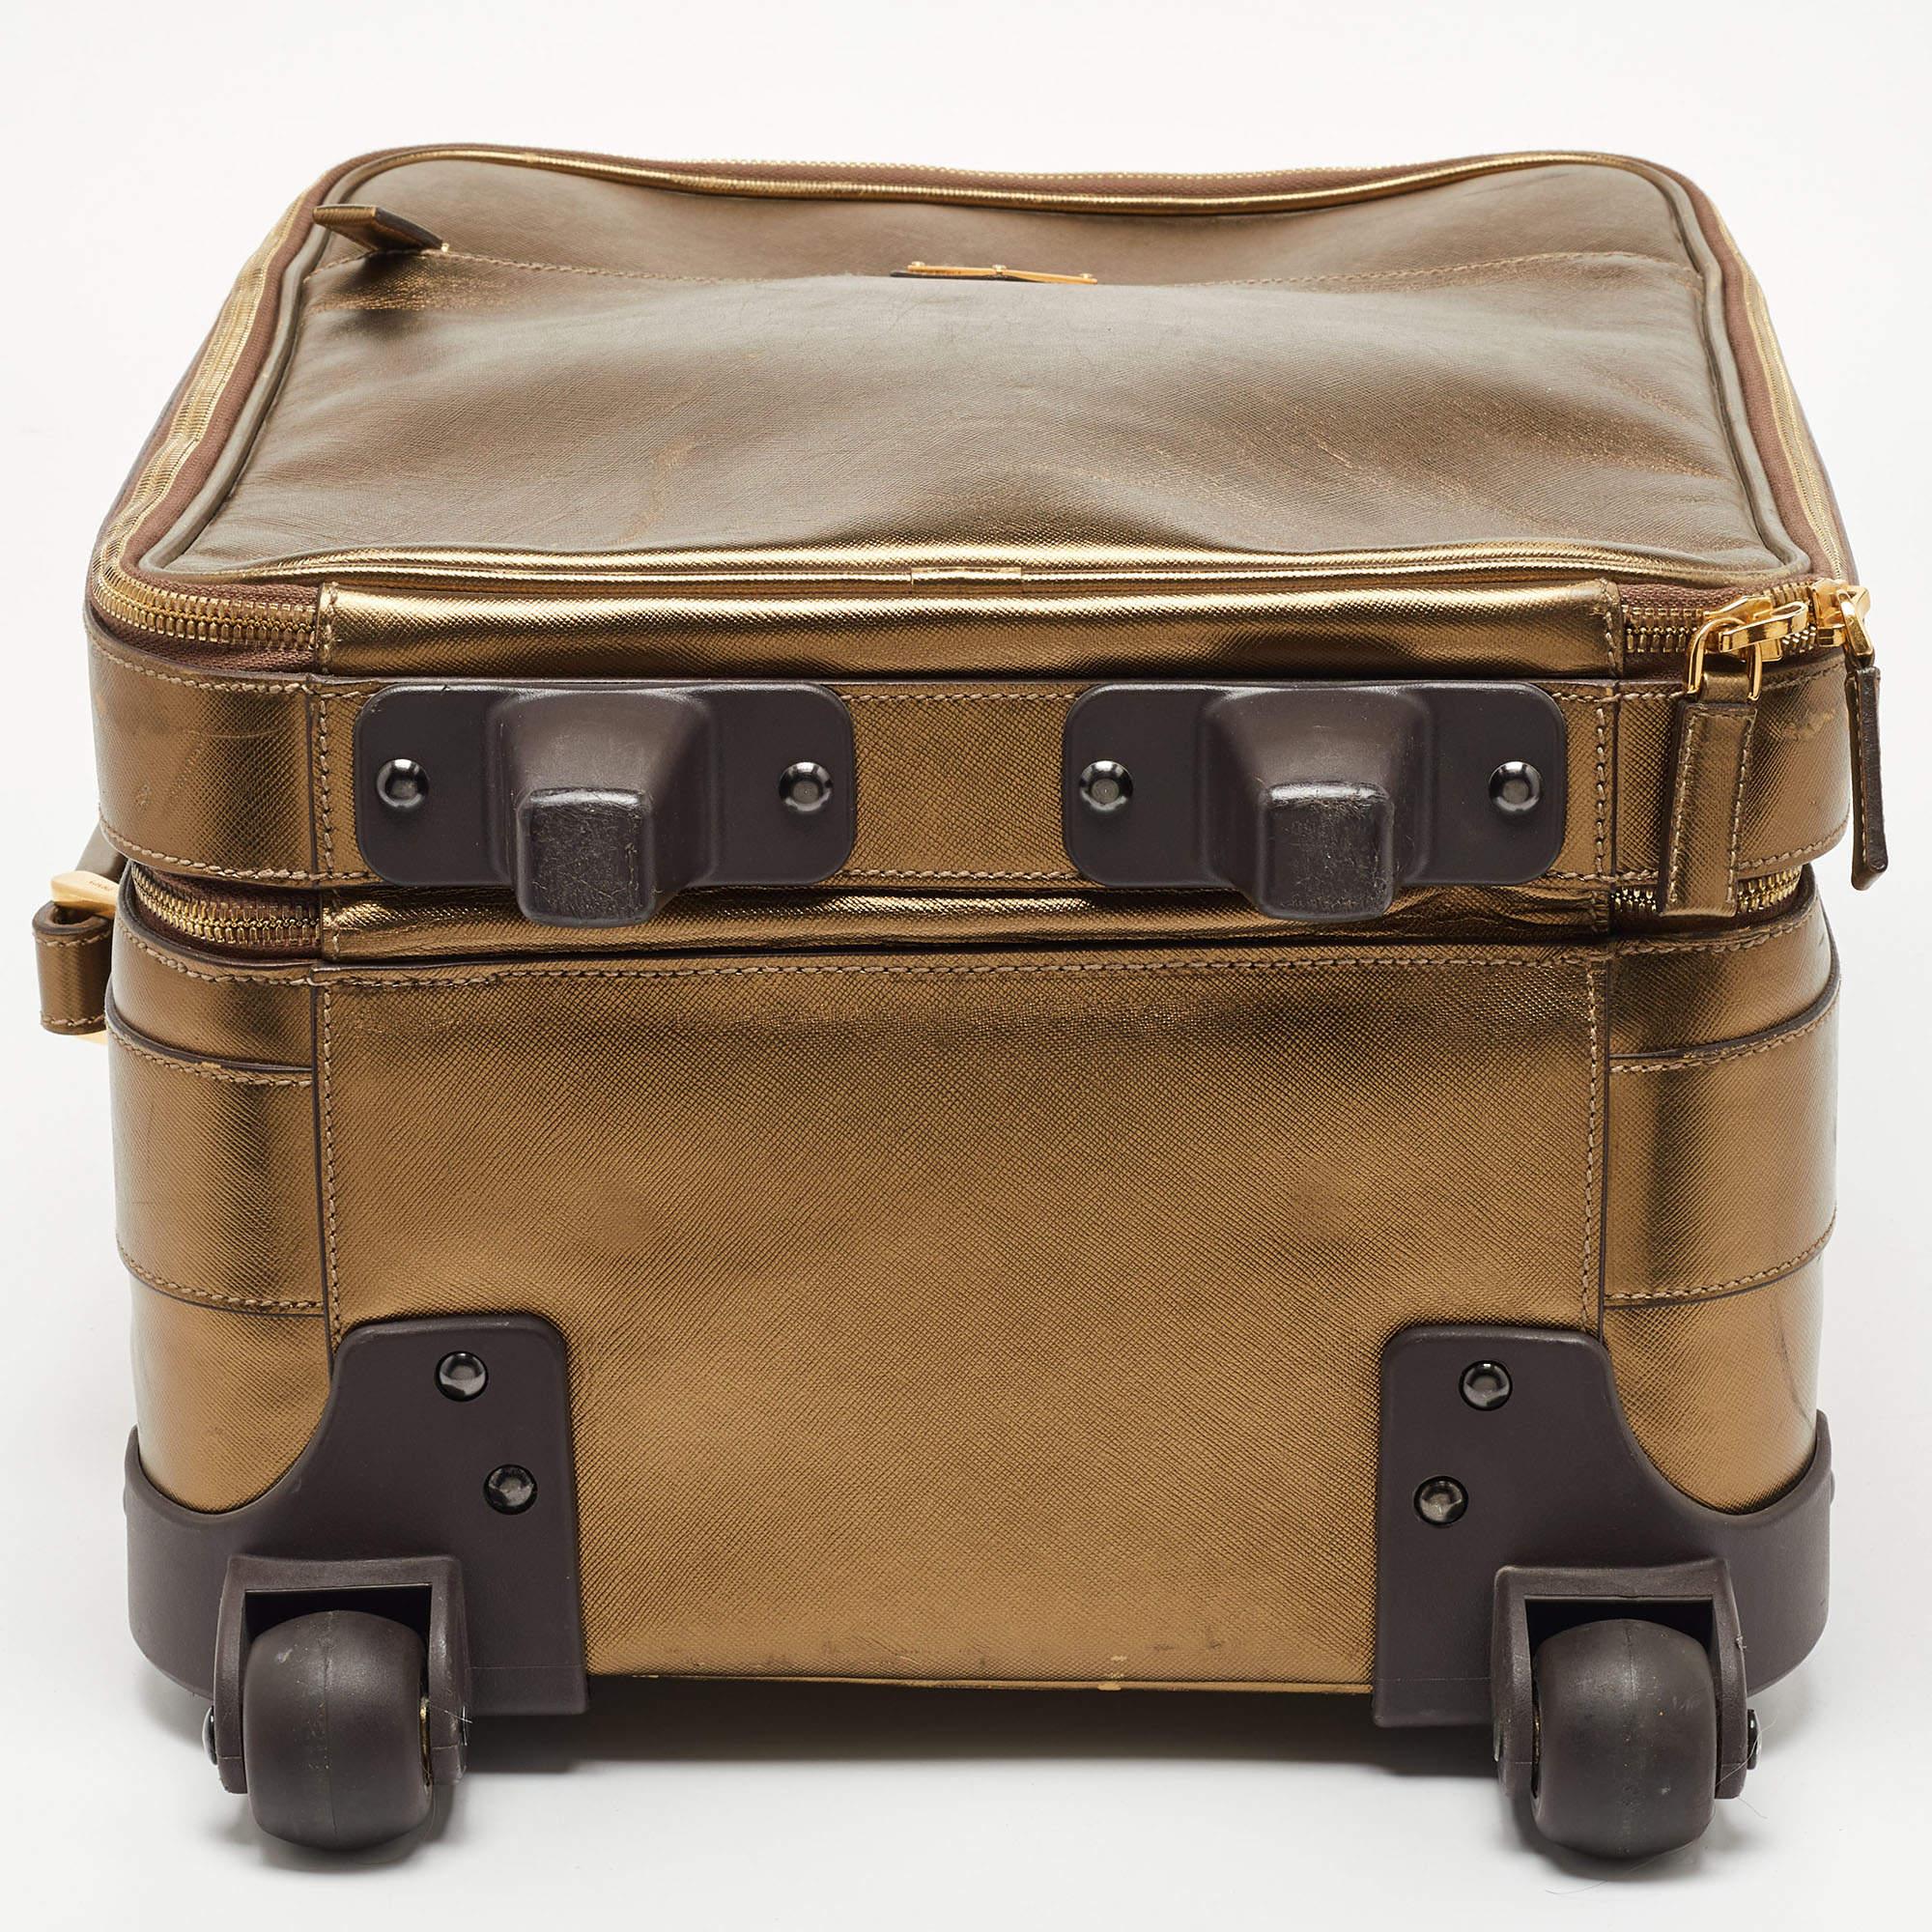 Prada Metallic Gold Saffiano Leather Travel Rolling Trolley Luggage 4